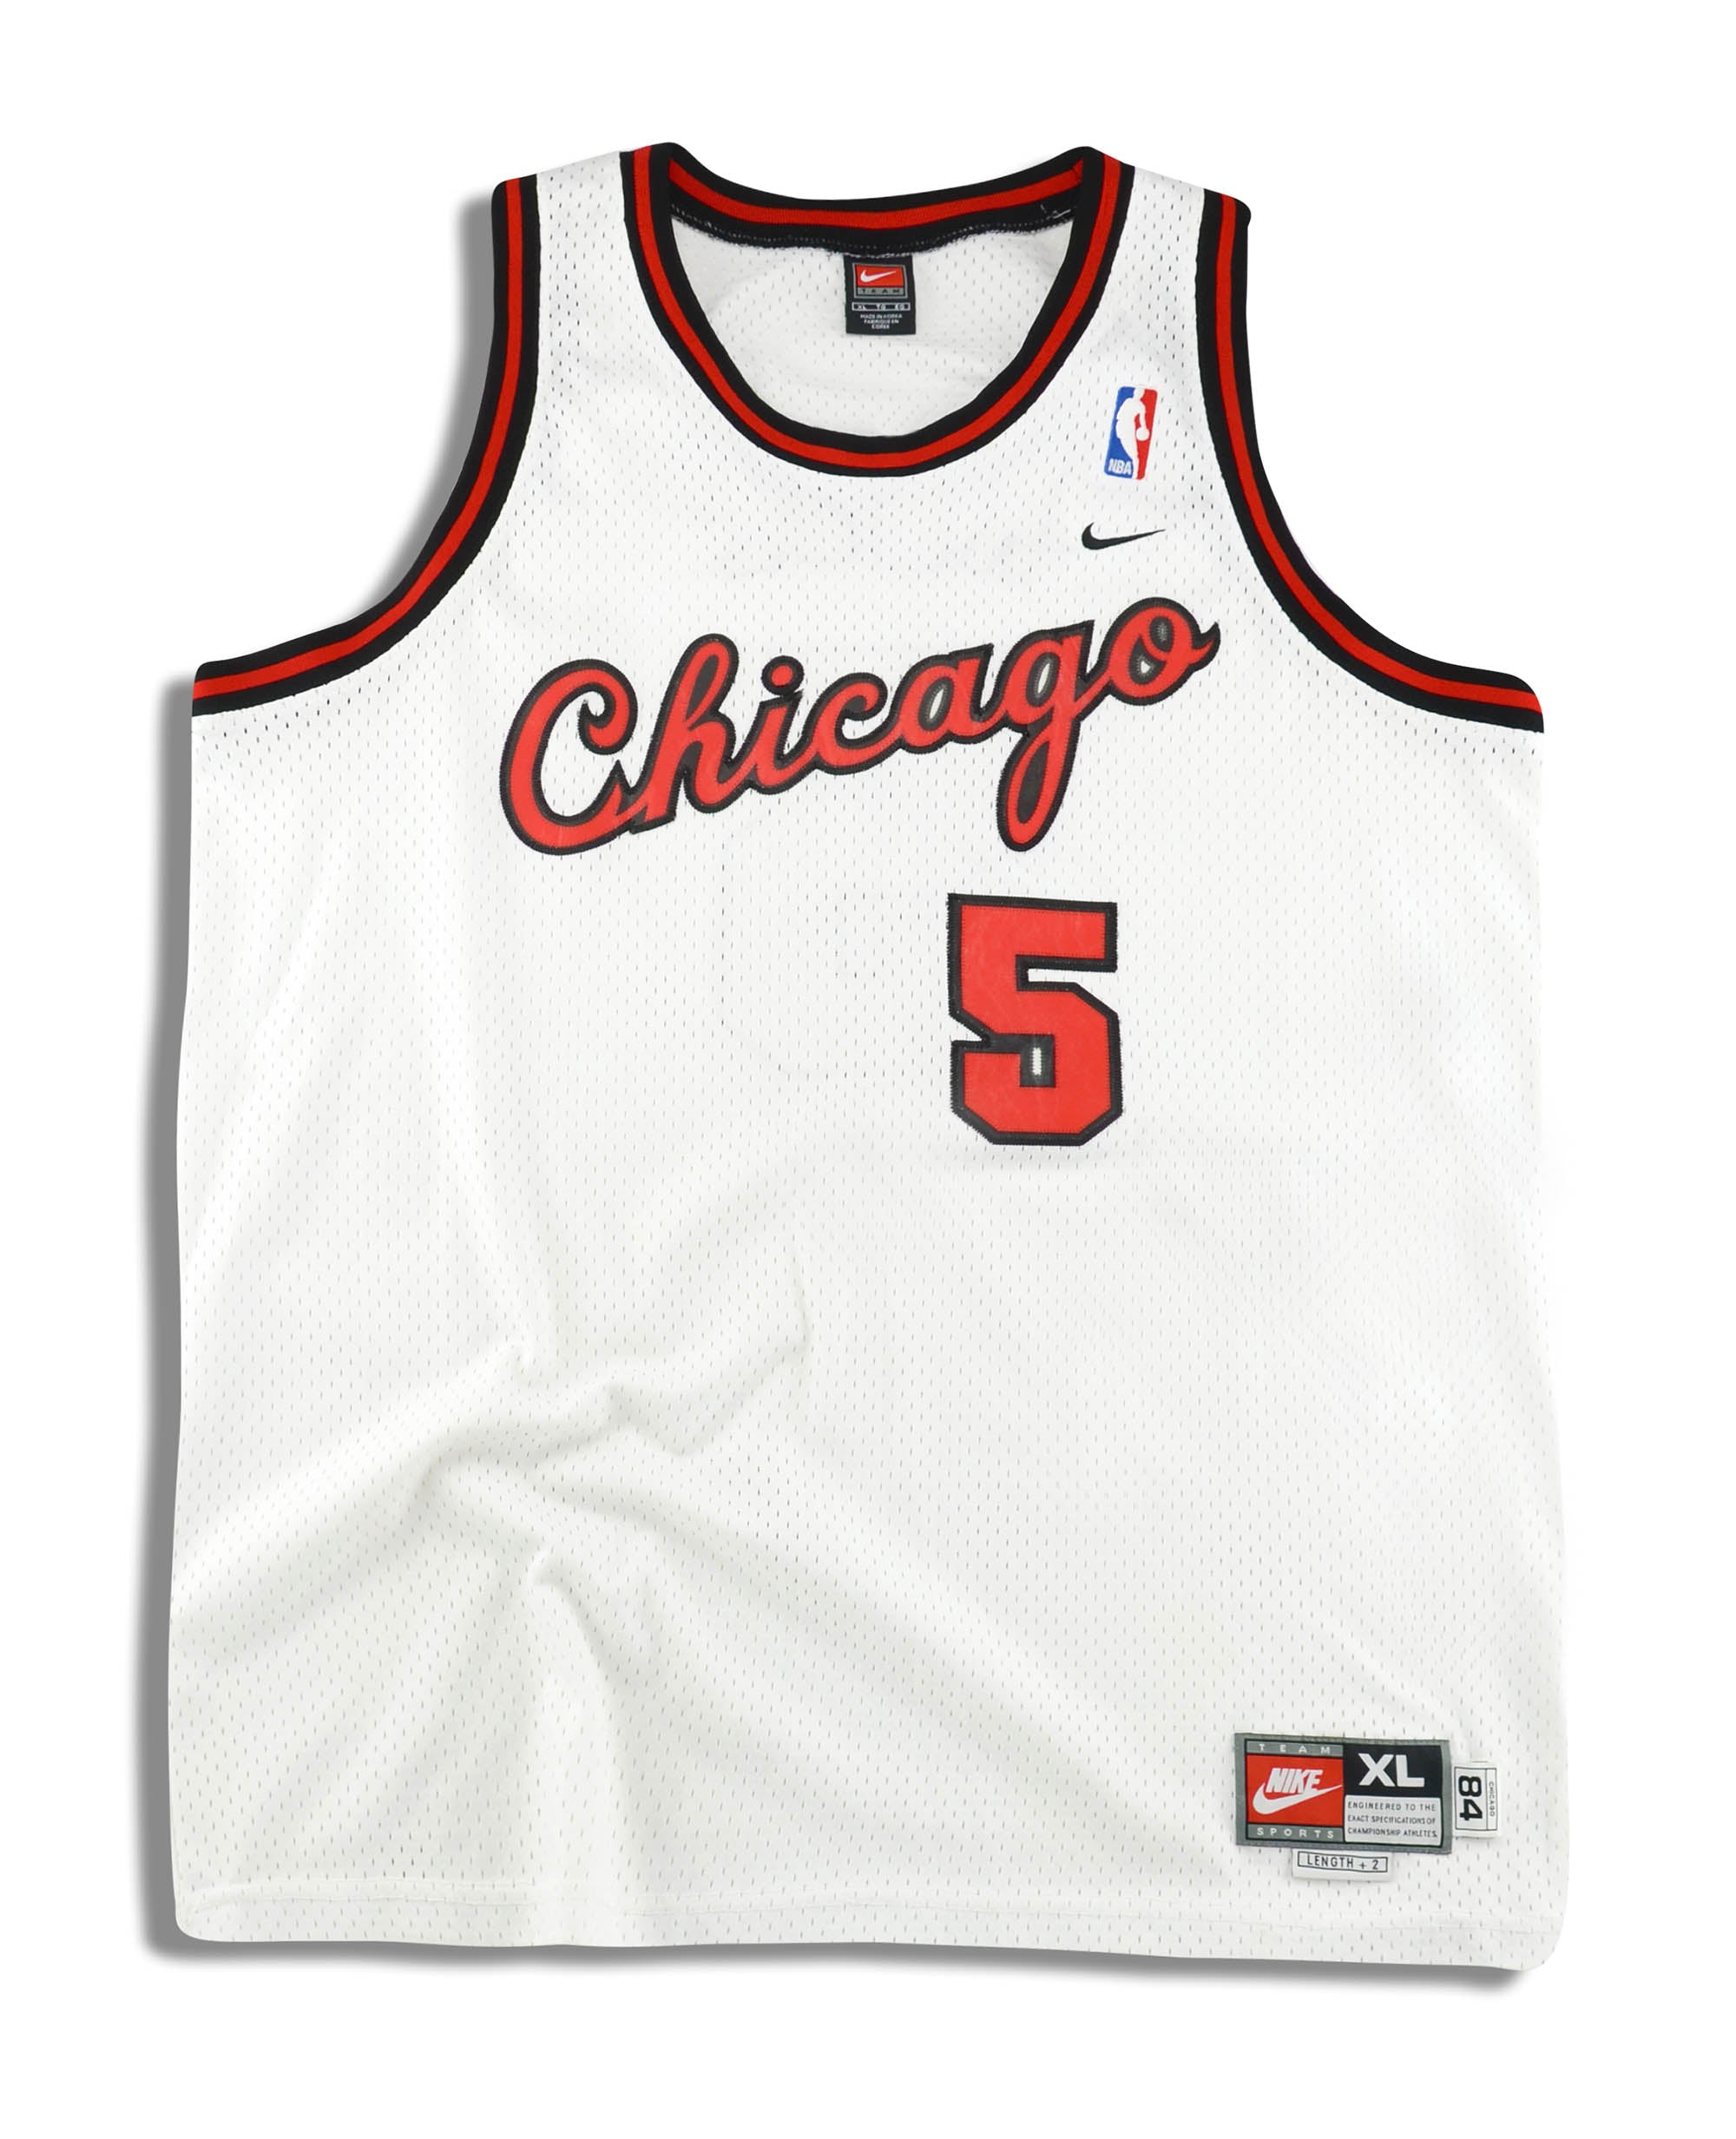 Chicago Bulls Jersey Jalen Rose 5 by Reebok 